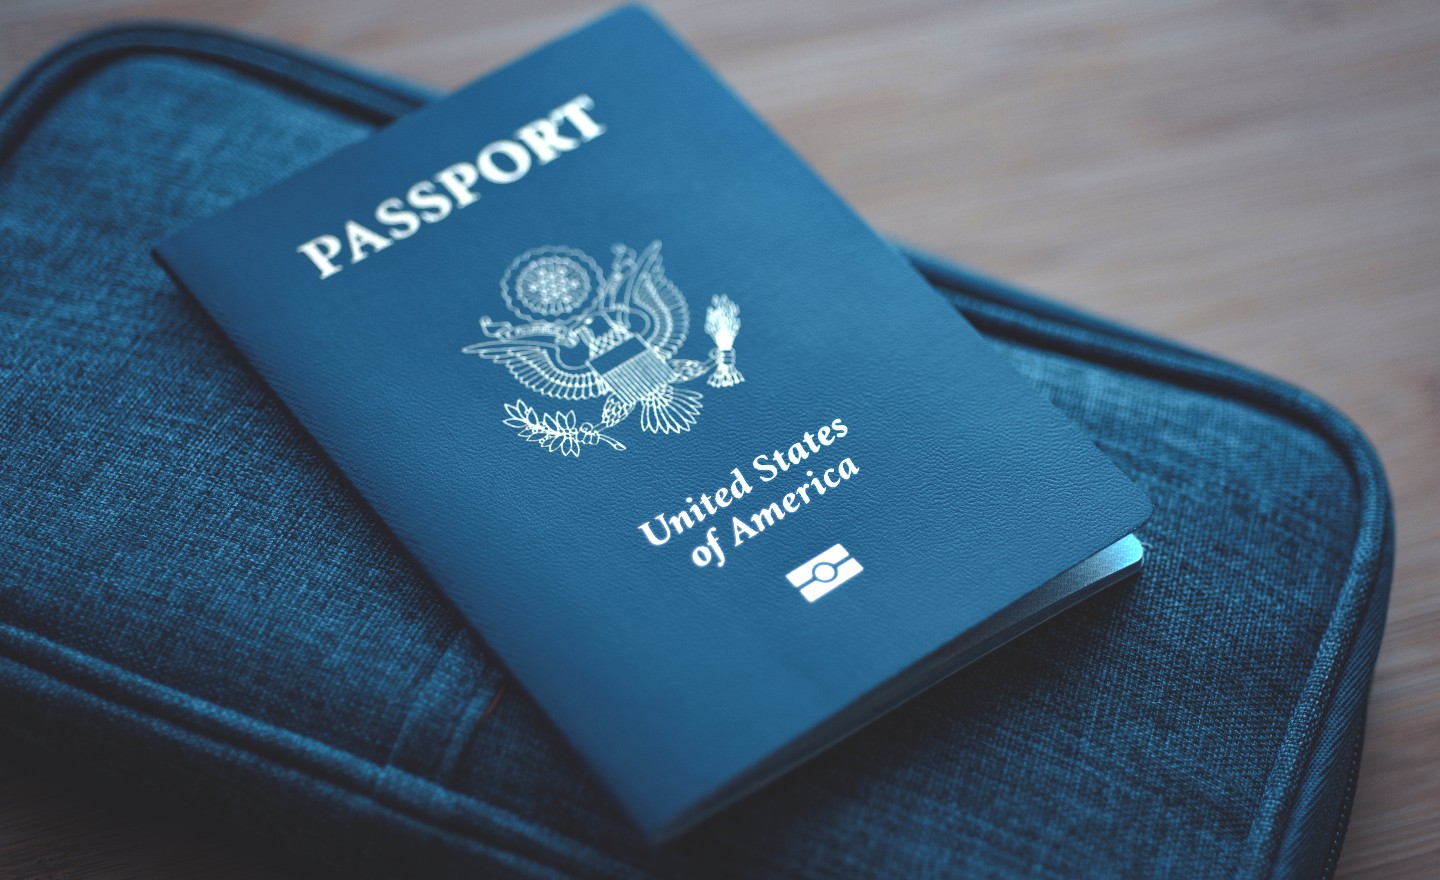 renew passports online